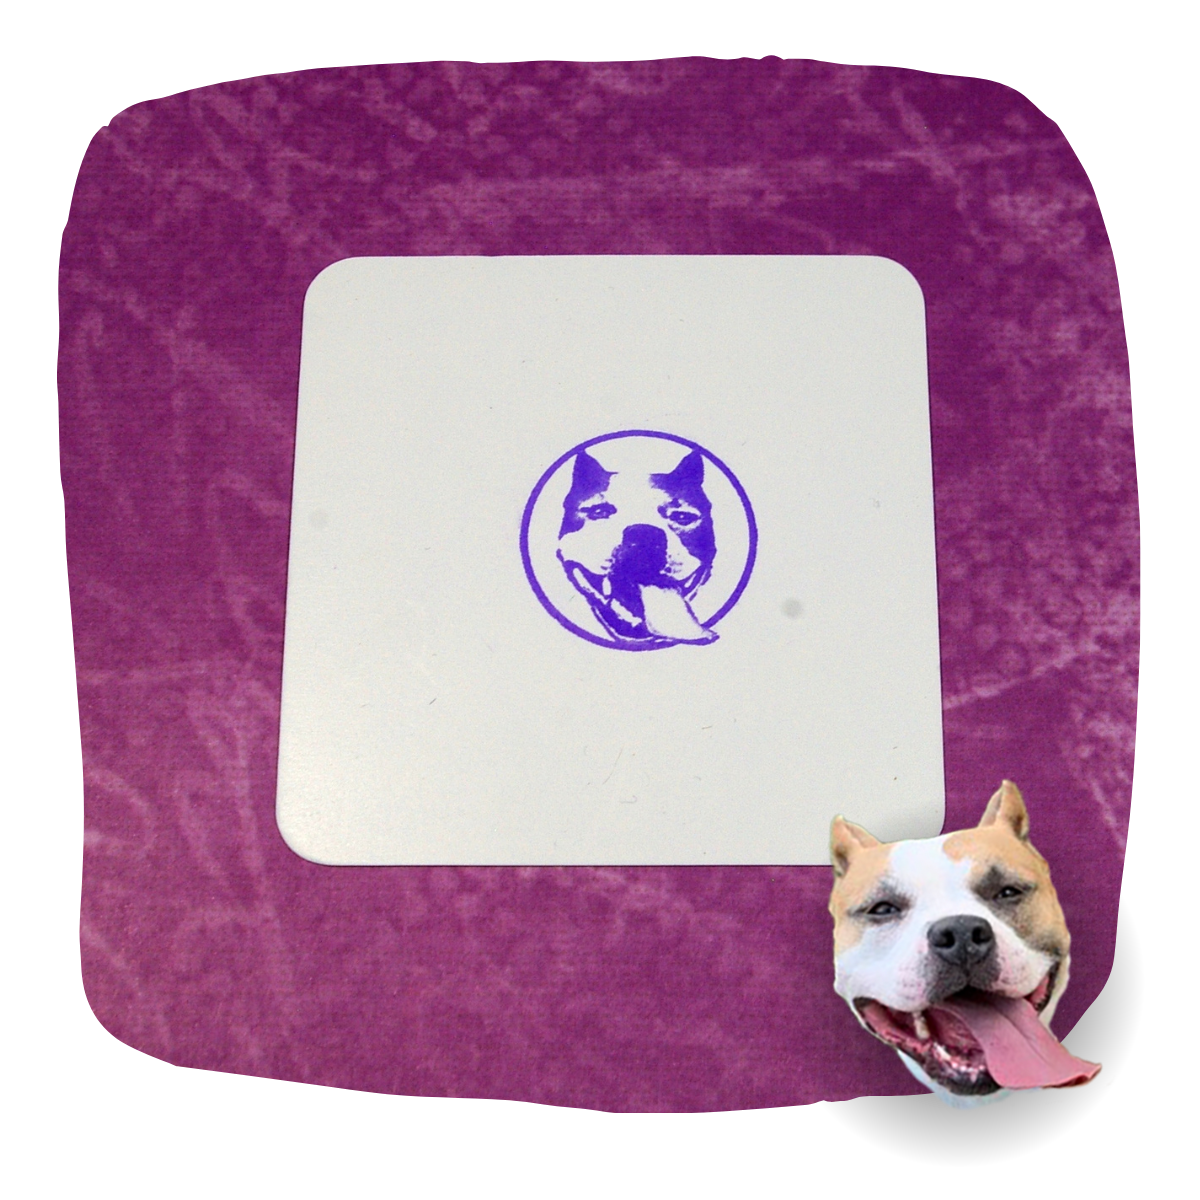 Dog Rubber Stamp